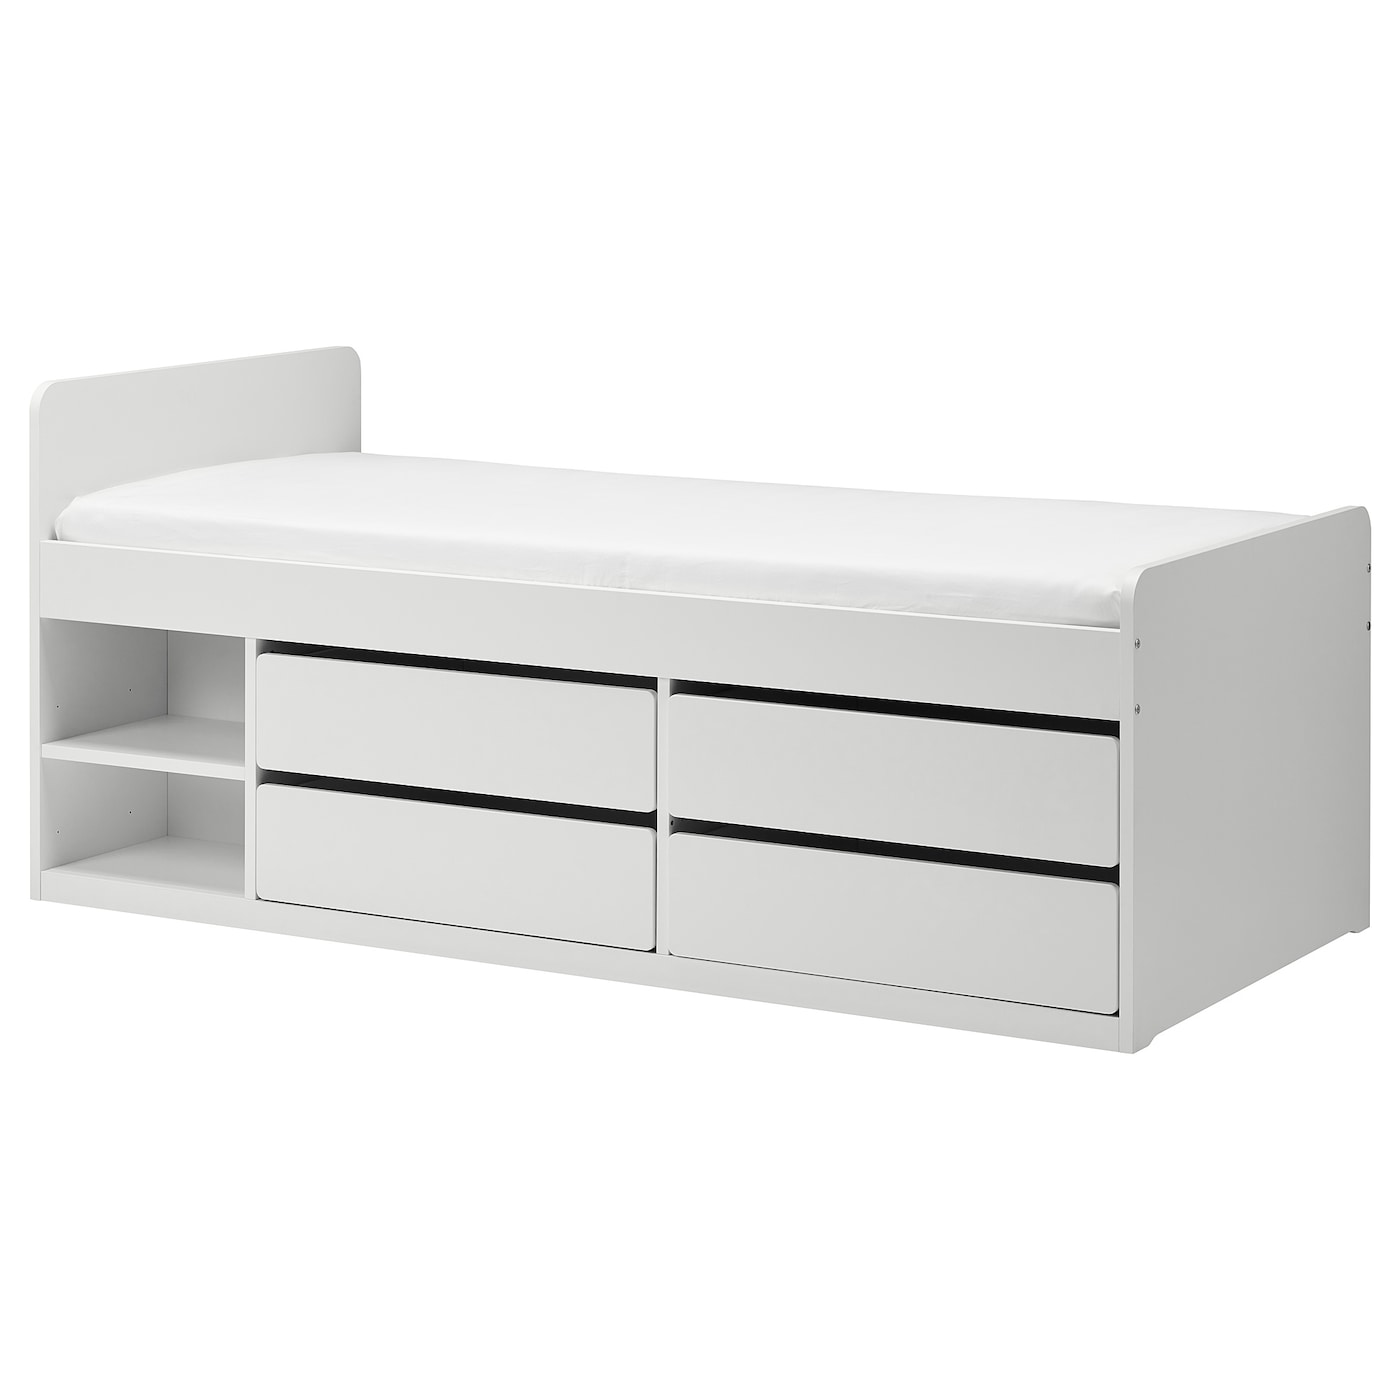 Каркас кровати - SLÄKT /SLАKT IKEA/ СЛЭКТ ИКЕА, 90x200 см, белый